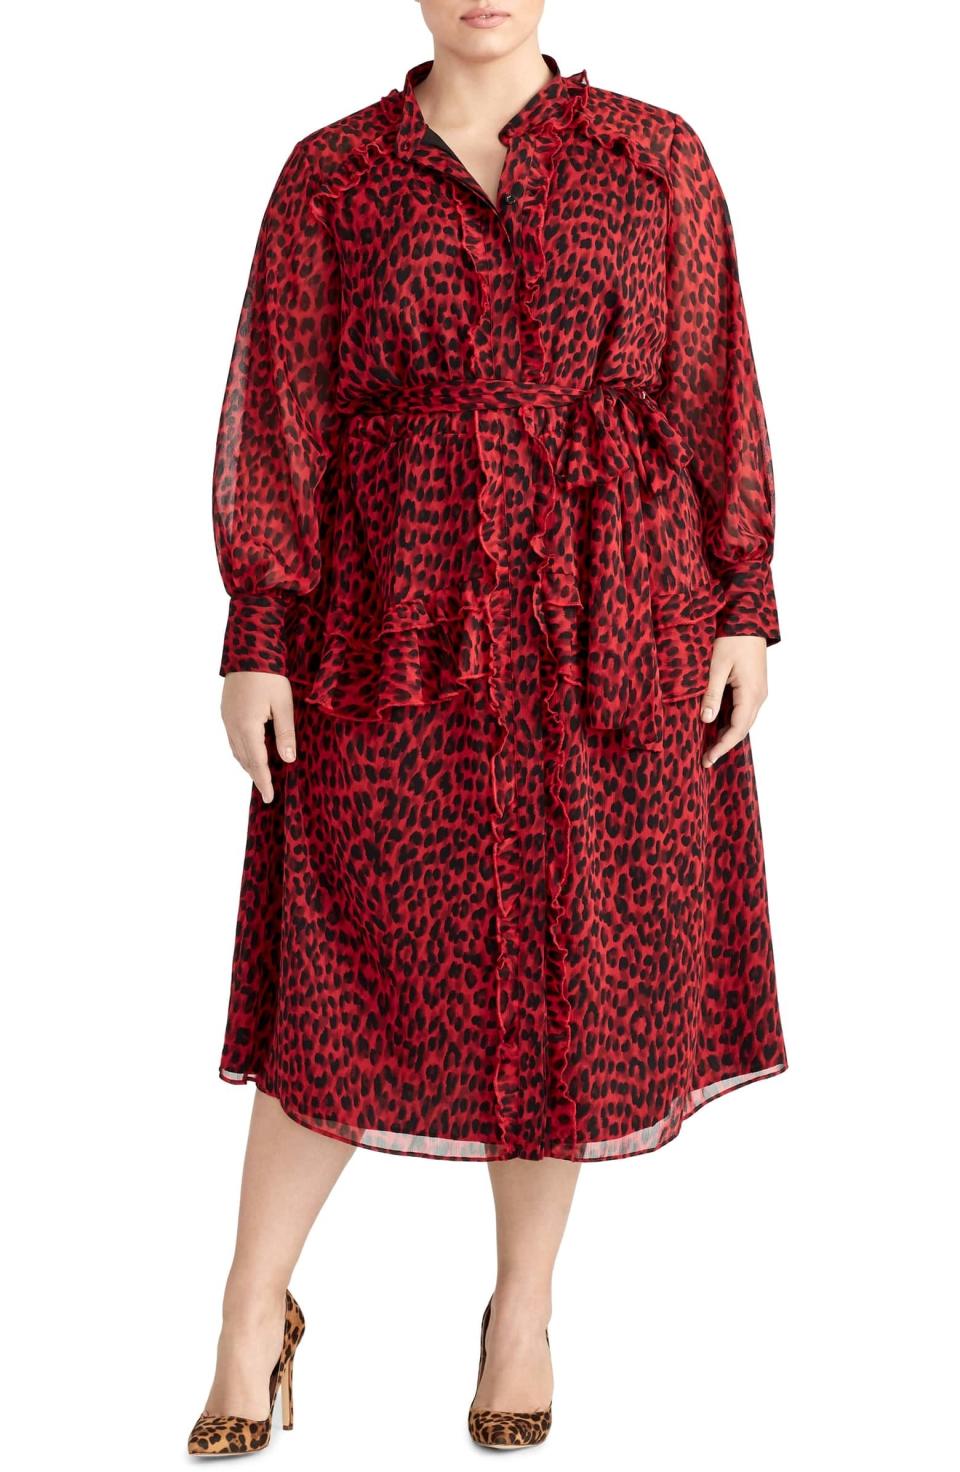 Rachel Roy Collection Leopard Ruffle Dress